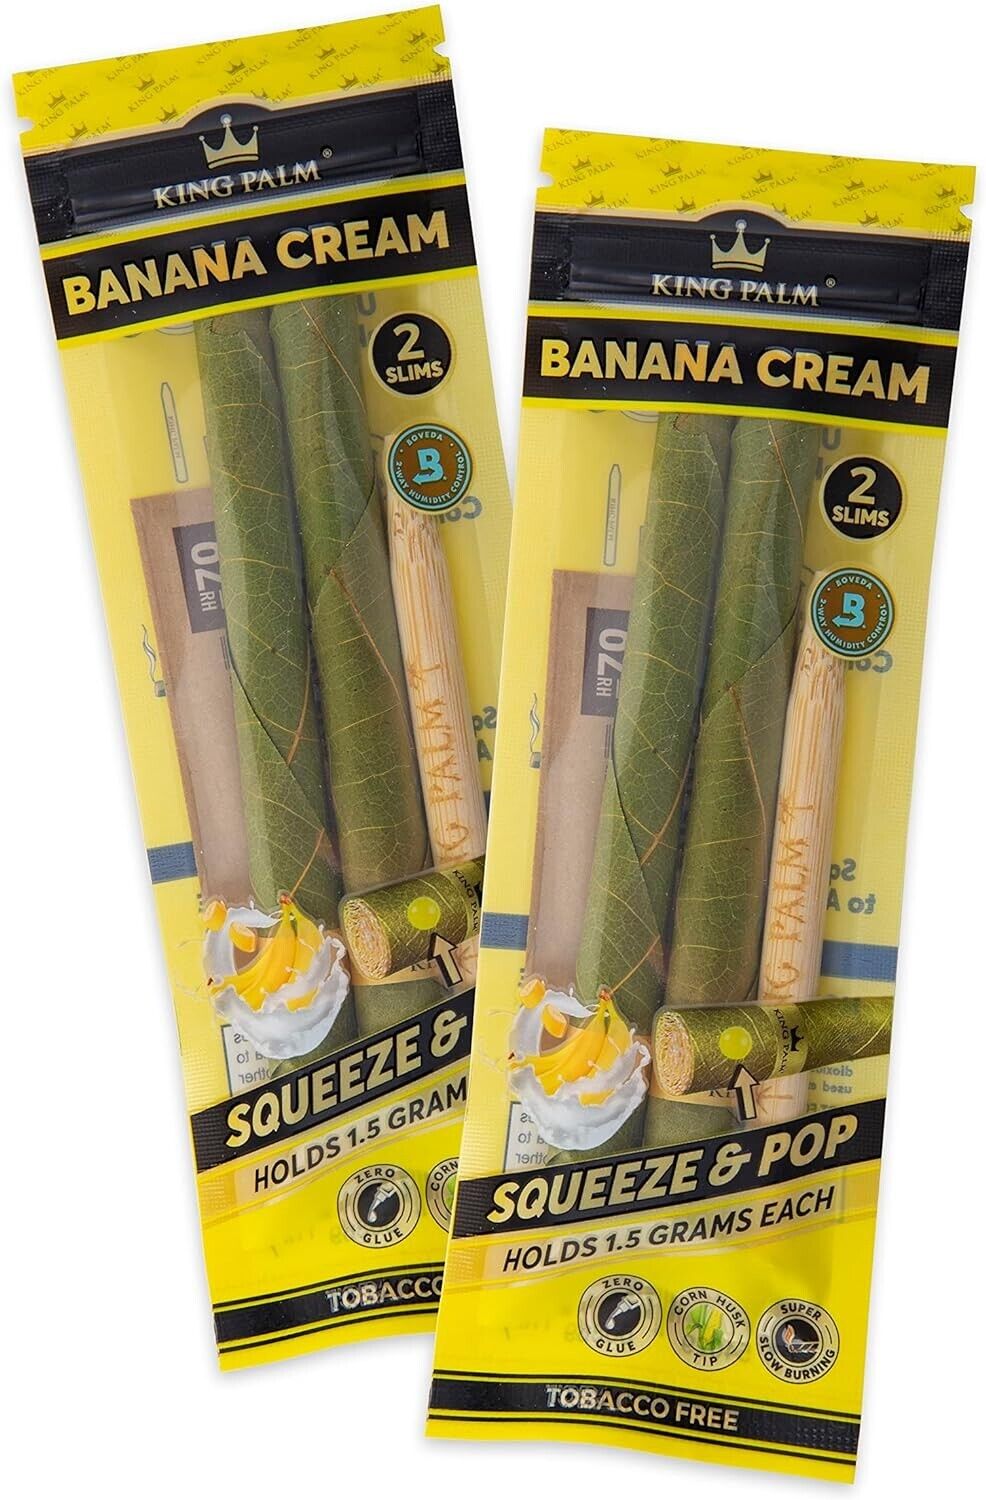 King Palm | Slim | Banana Cream | Palm Leaf Rolls | 2 Packs of 2 Each = 4 Rolls